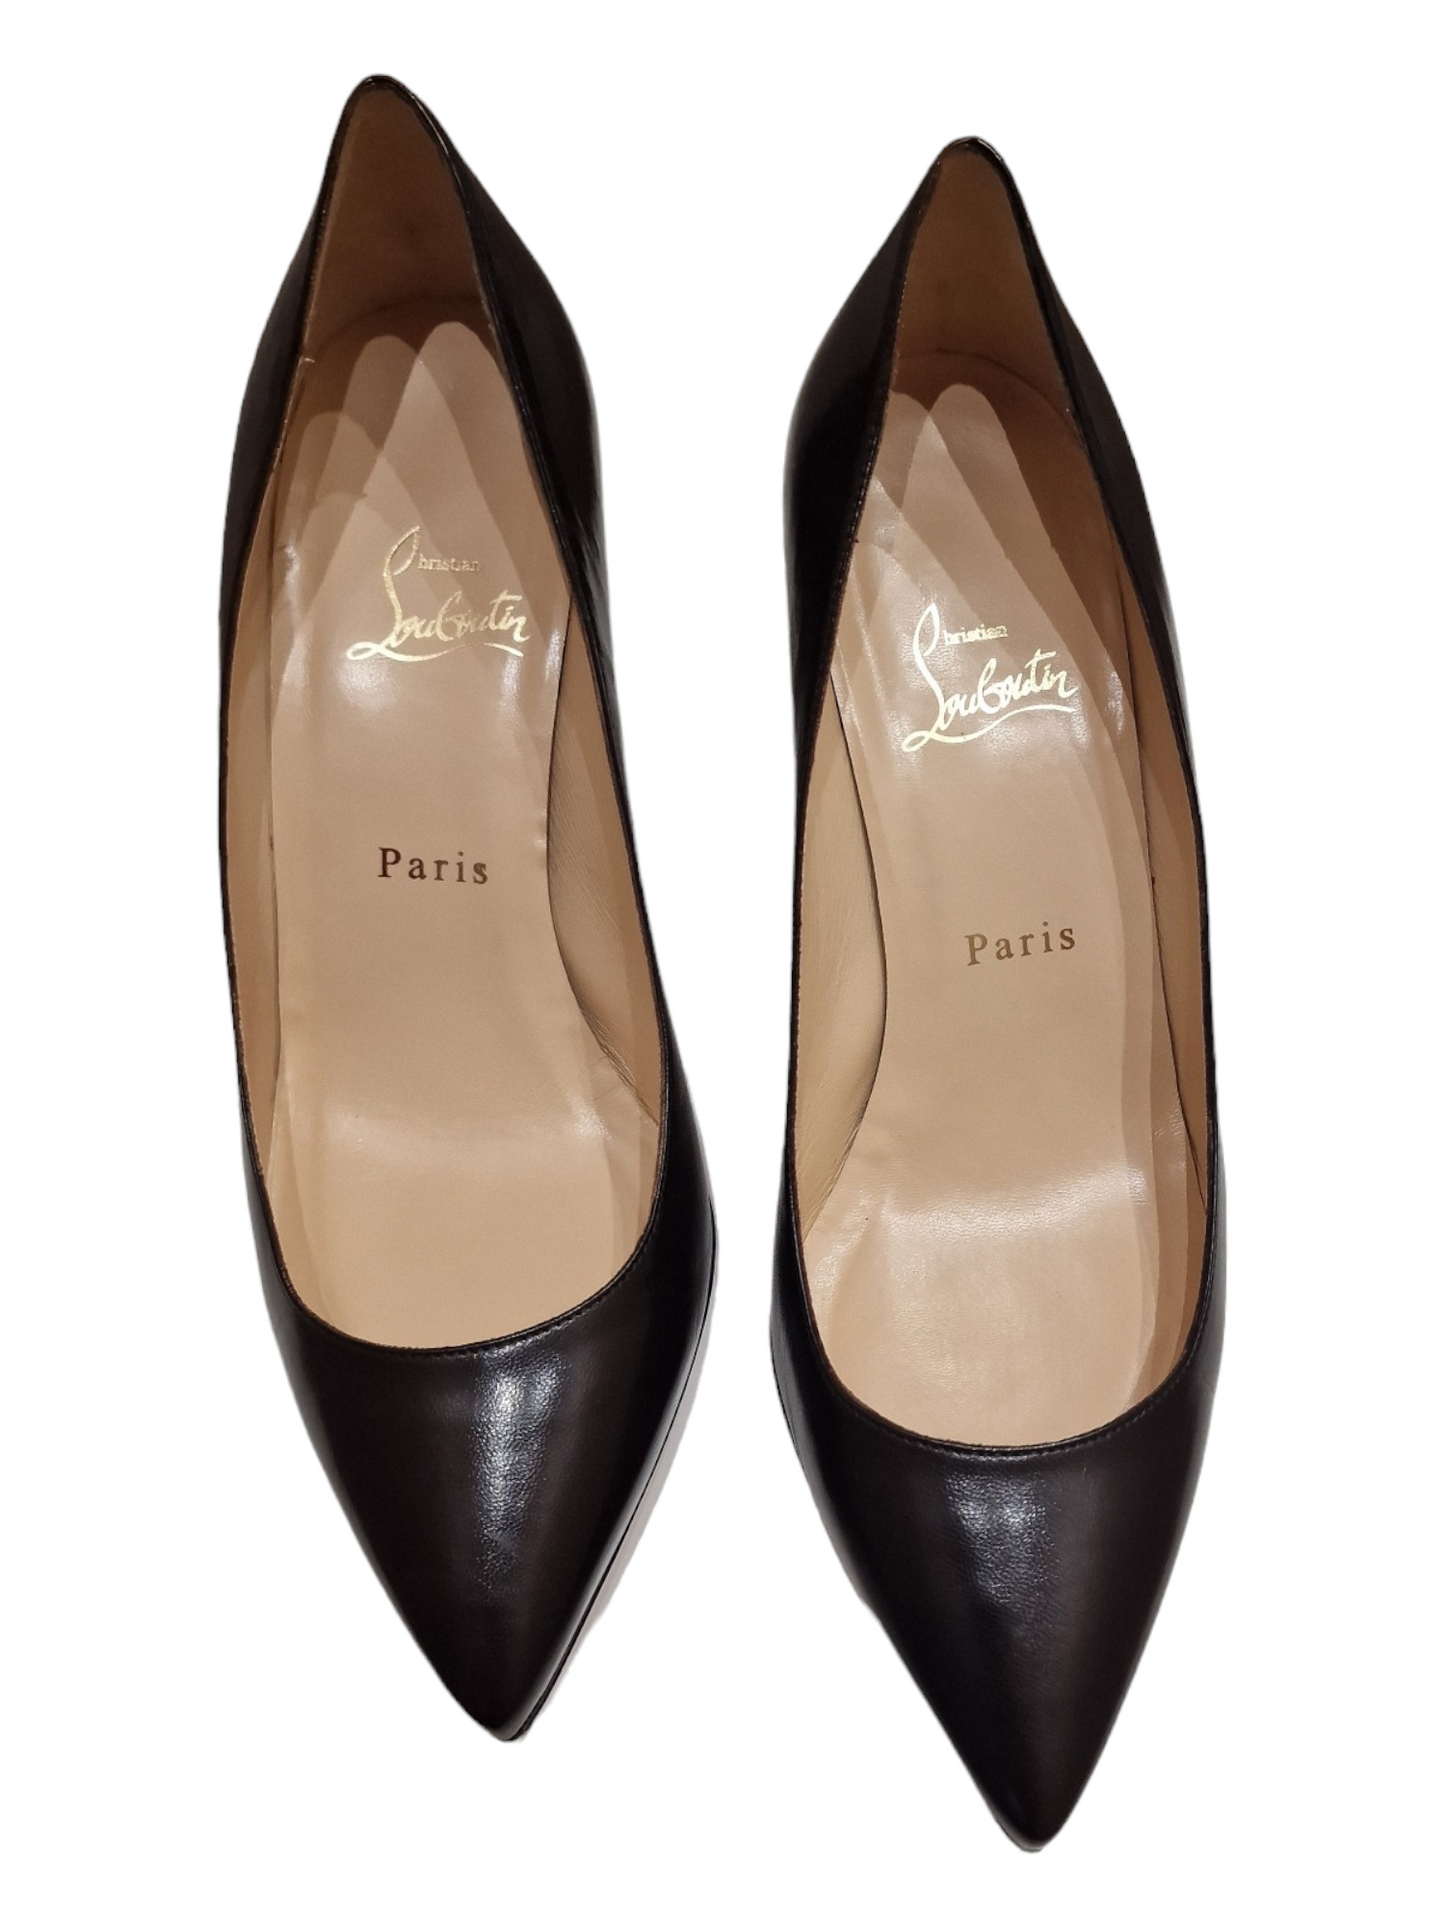 Louboutin heels, chocolate brown, size 39/6